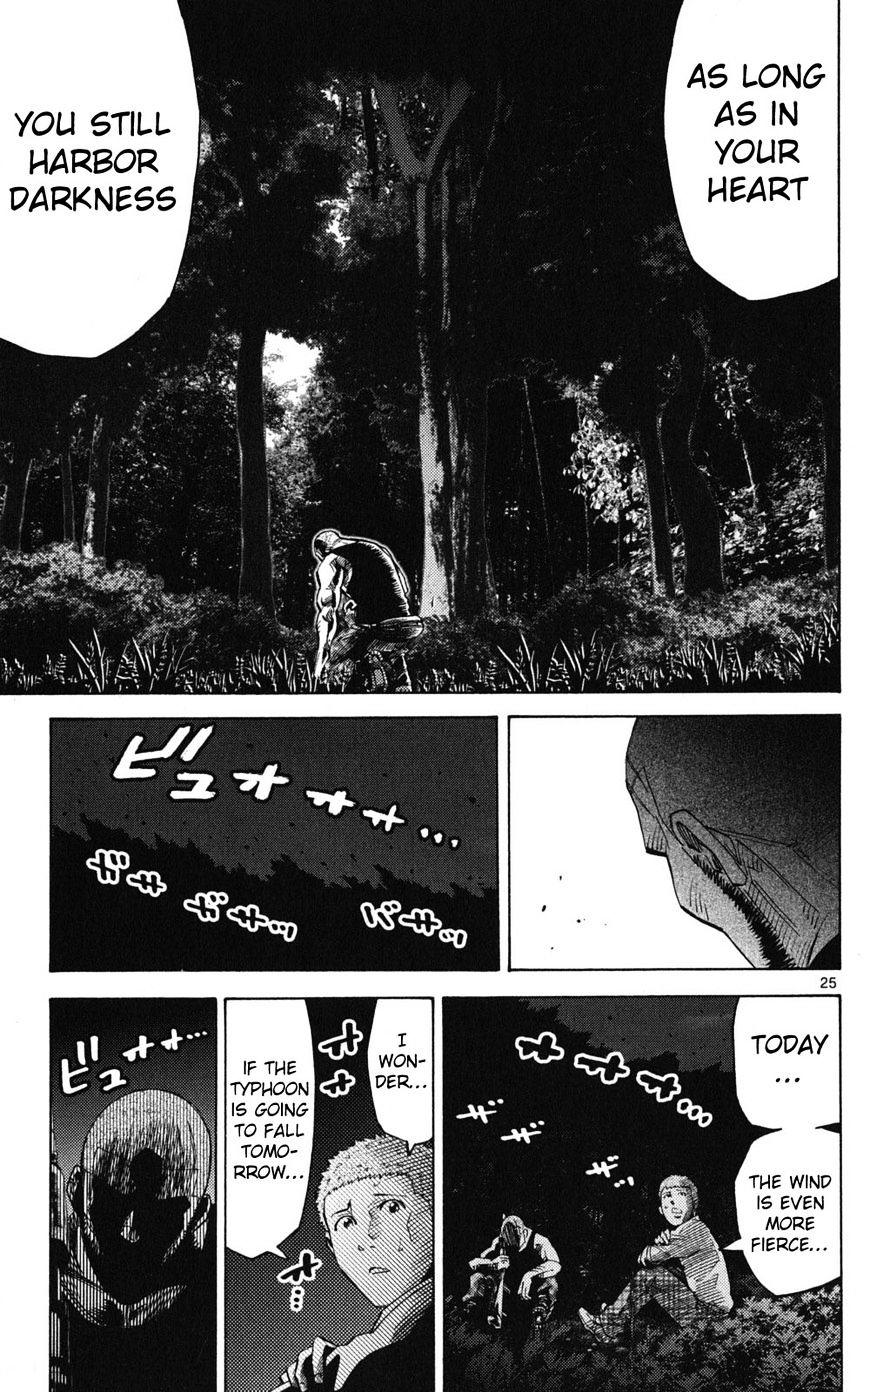 Imawa No Kuni No Alice Chapter 49.2 : Side Story 5 - King Of Spades (2) page 25 - Mangakakalot